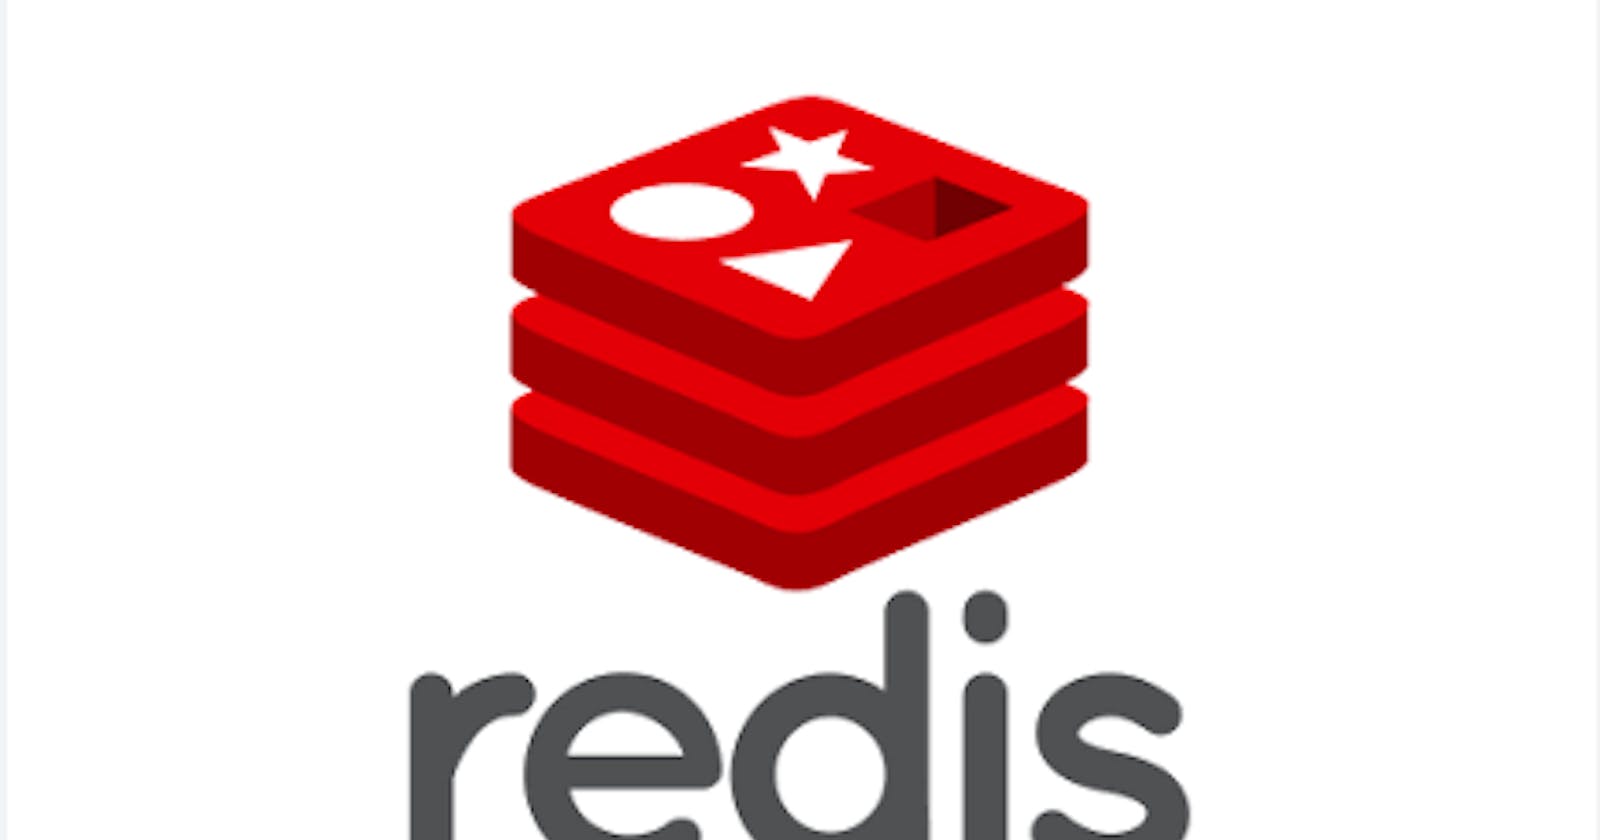 Redis database server's complex commands